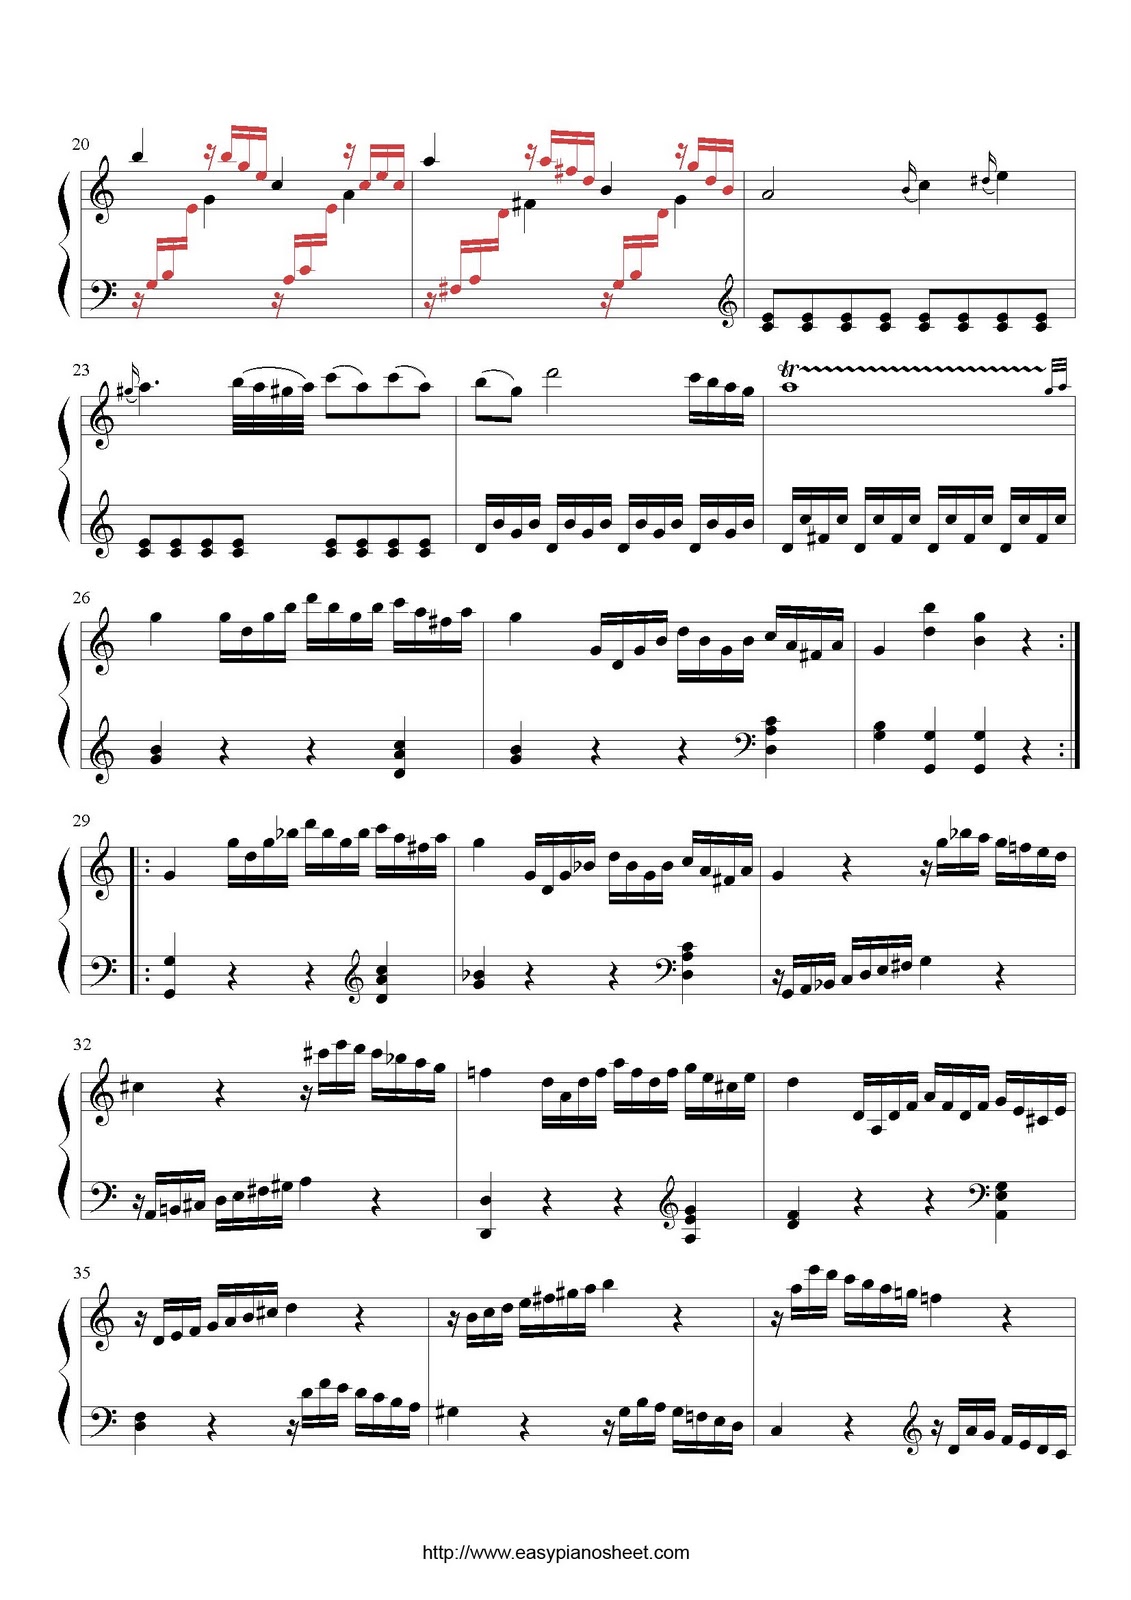 Partitura Facil: Aprende Piano Gradualmente: Wolfgang Amadeus Mozart,  partituras de piano facil: Allegro (Primer movimiento, SonataKV545)